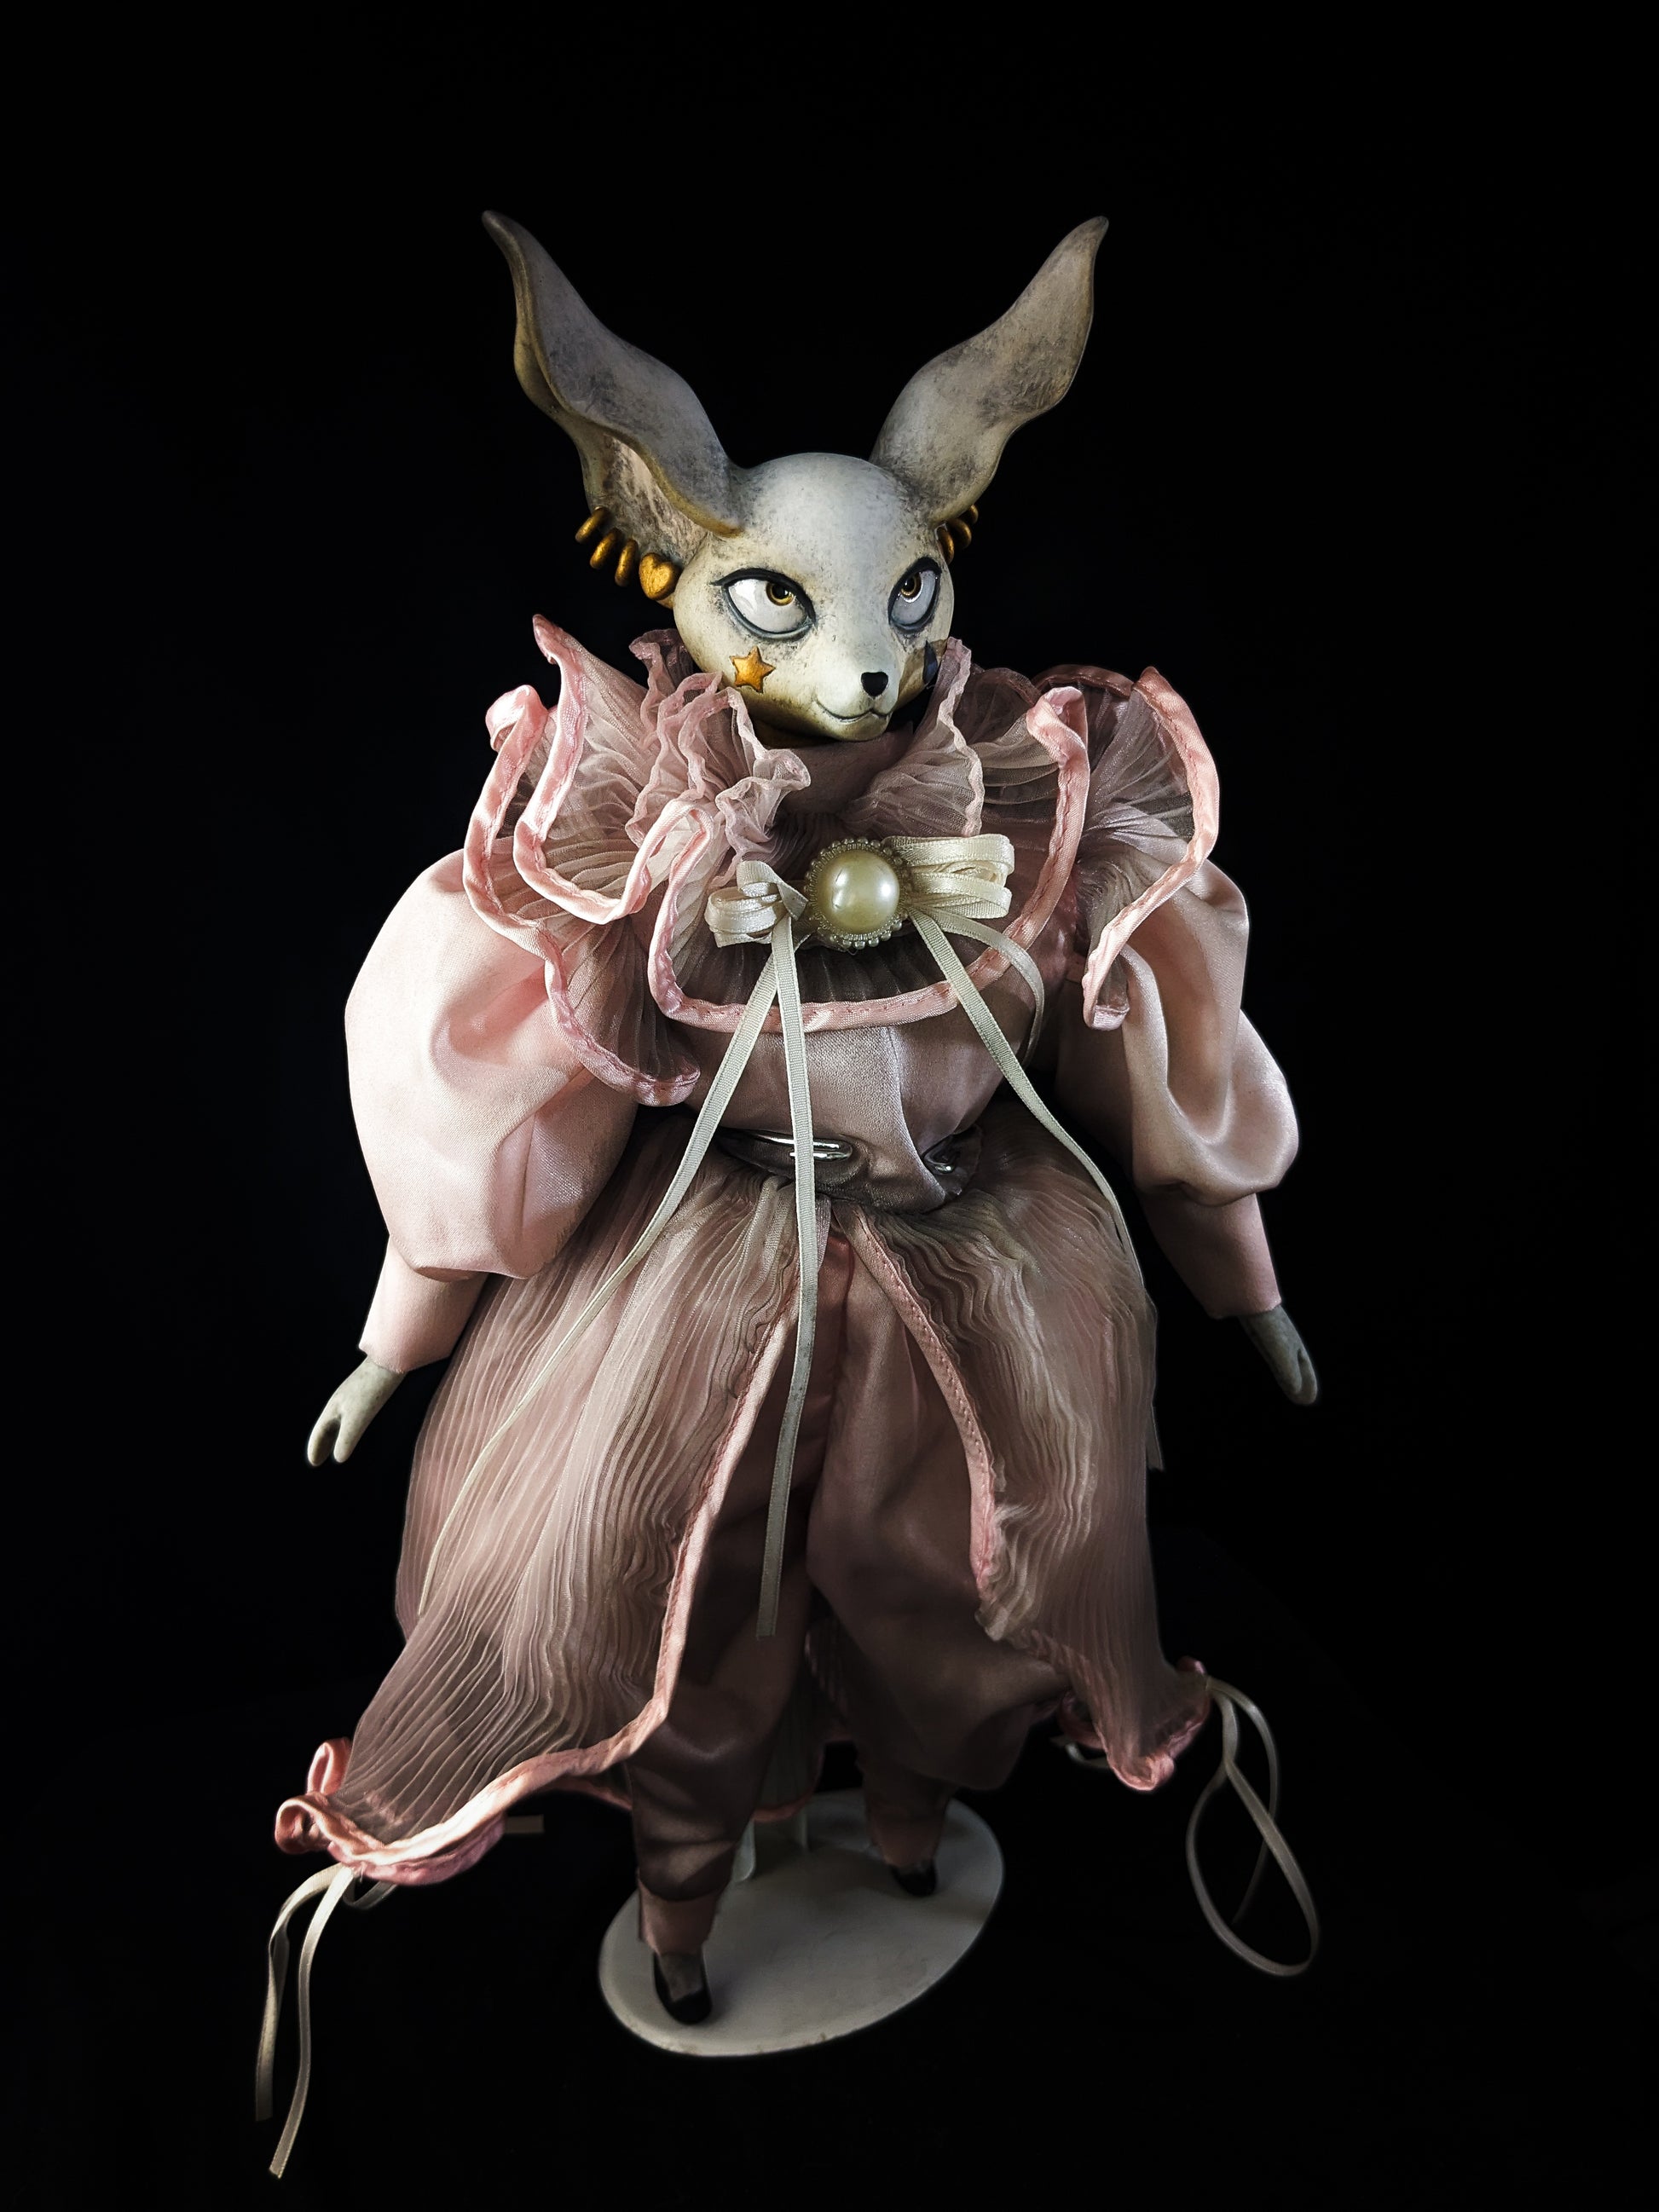 Depression Dolls: FOXINGTON GLOVE - Handmade Posable Gothic Art Doll for Enigmatic Souls